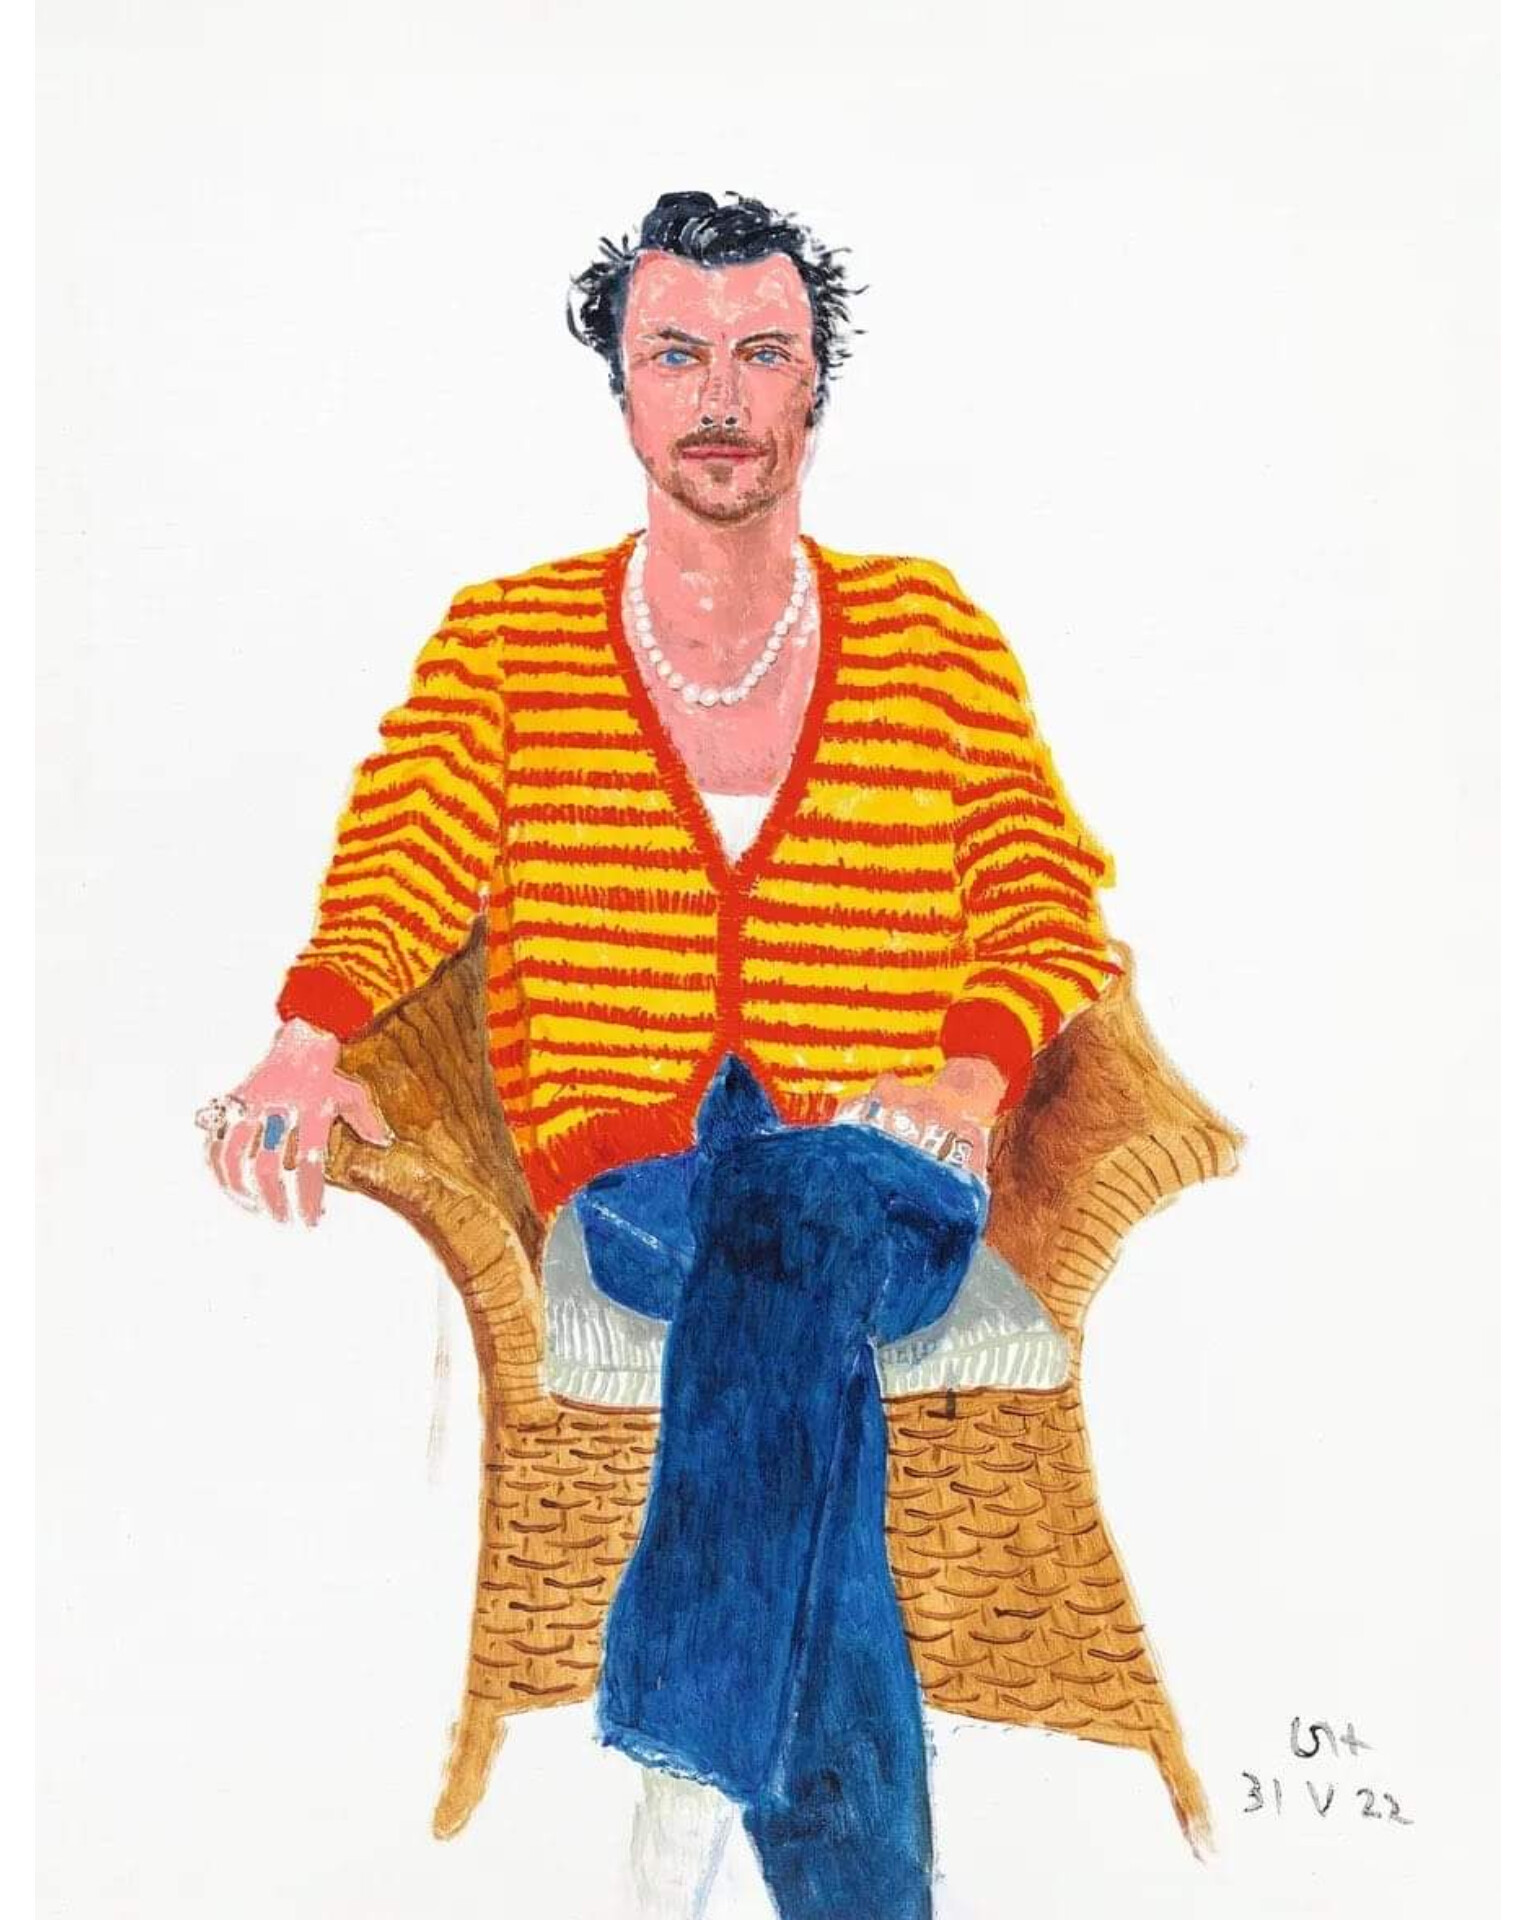 Harry Styles portrait by David Hockney